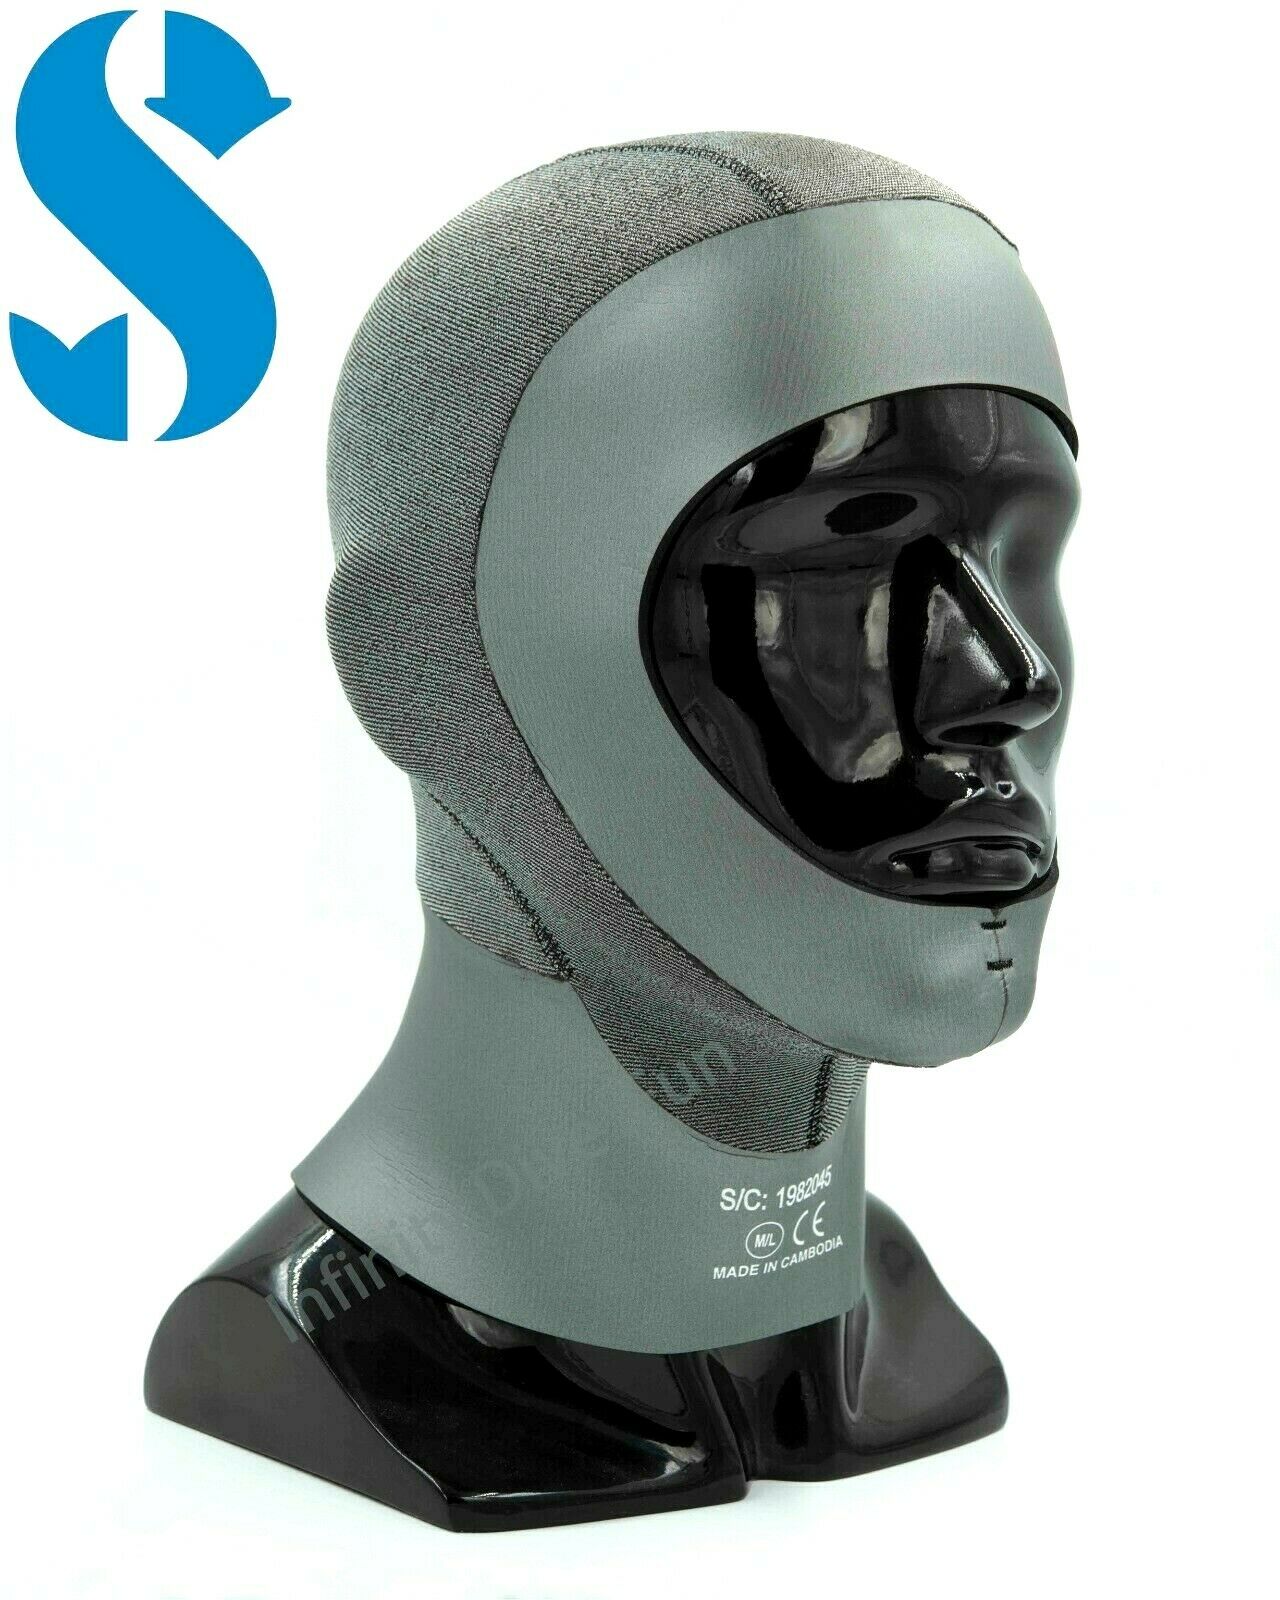 Scubapro Everflex 5/3mm Semi-dry Hood with Seal